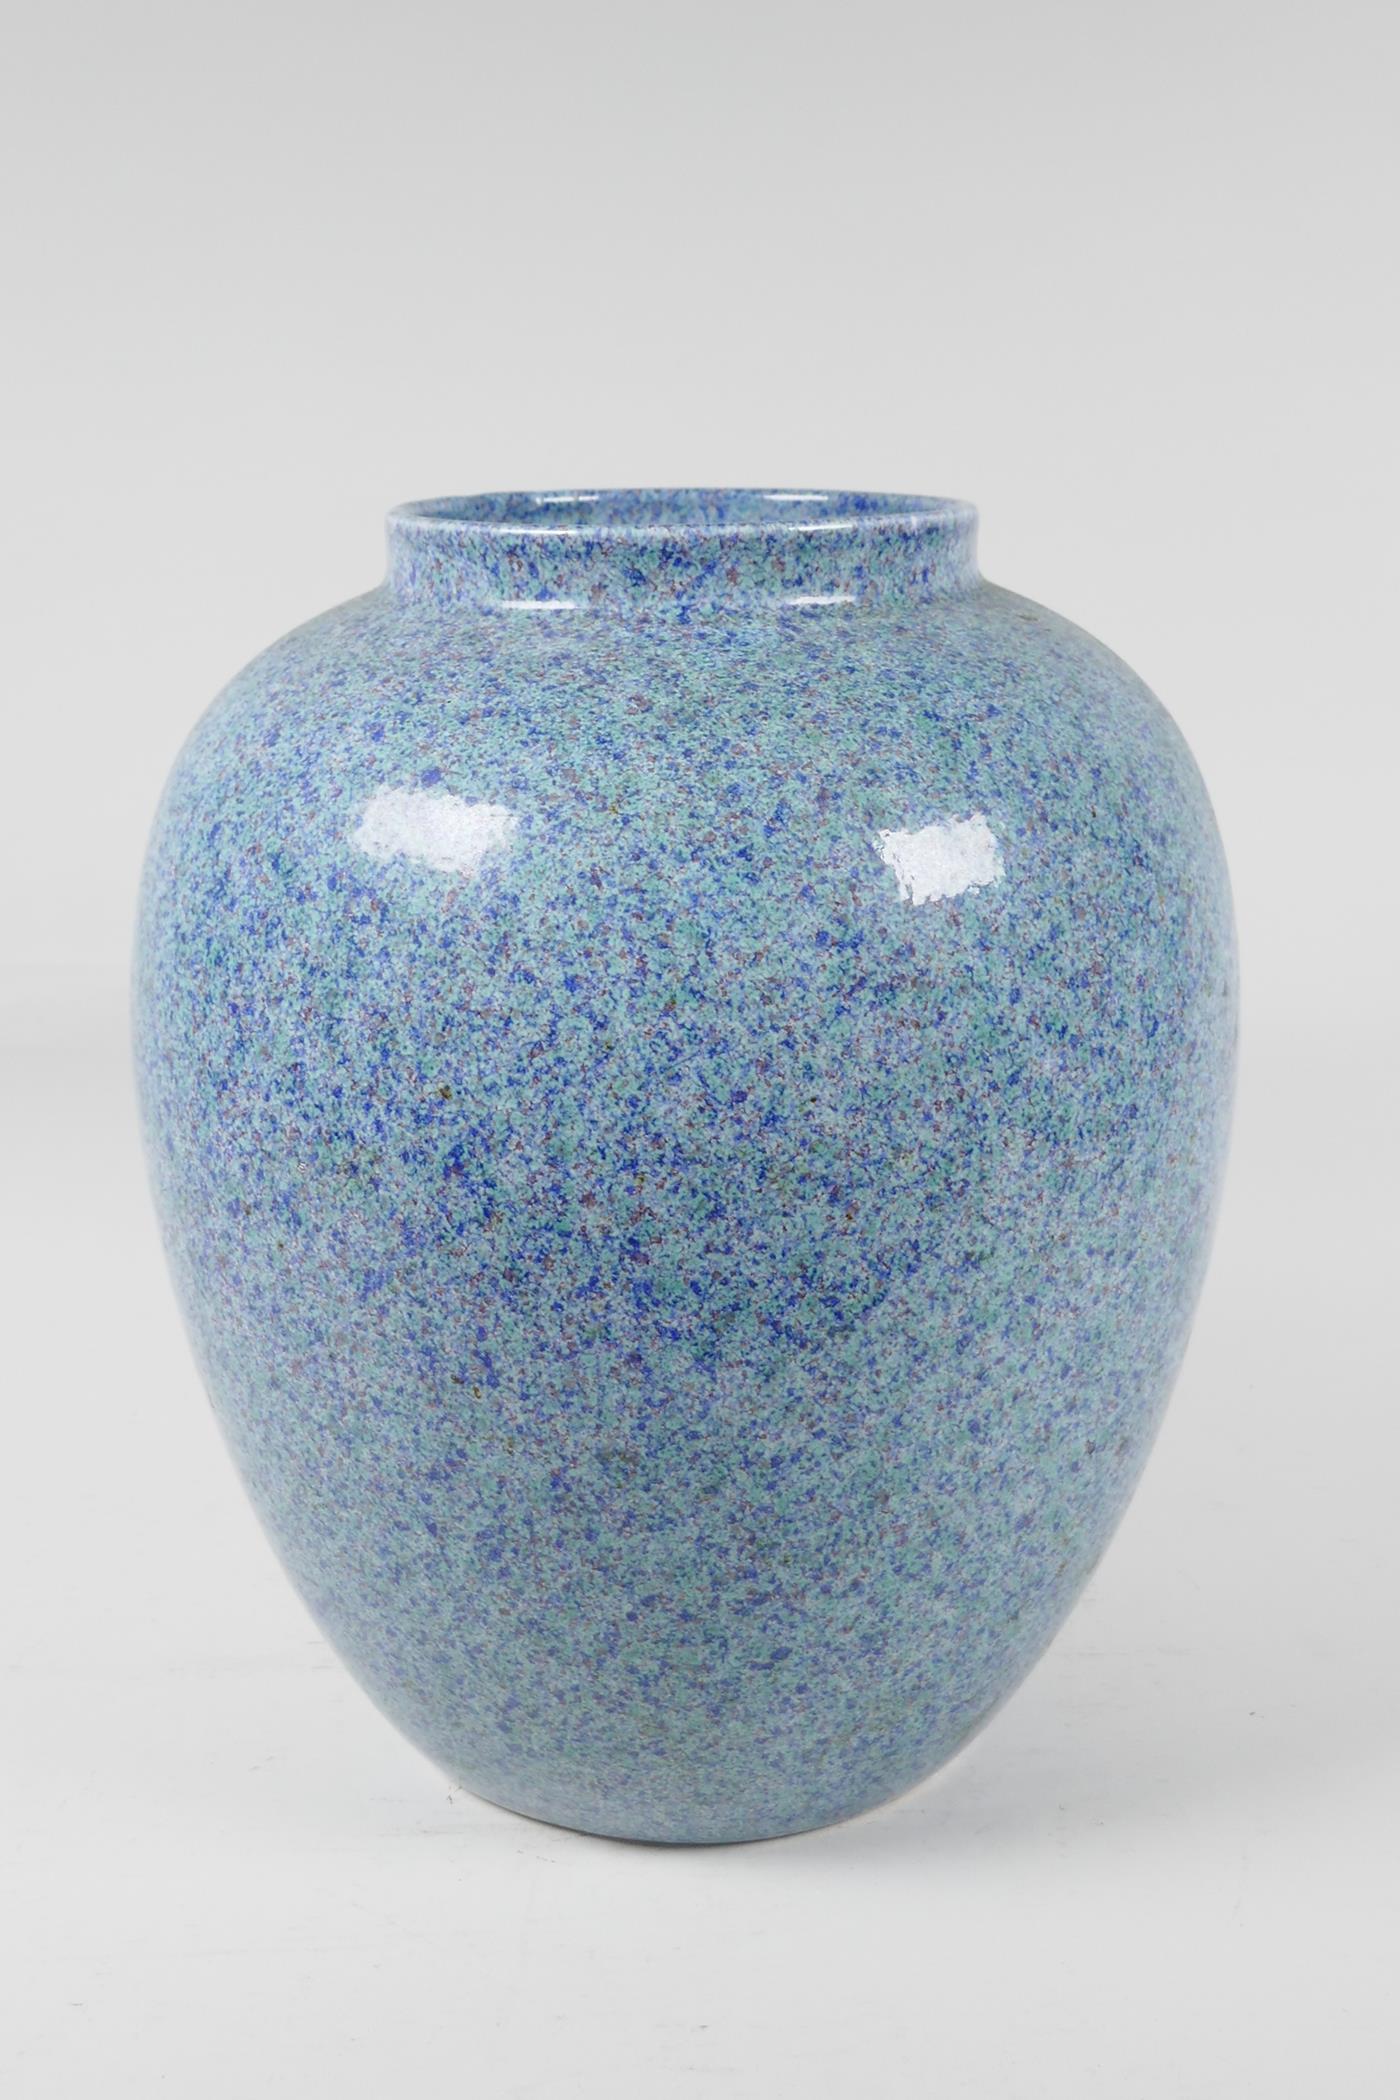 A Continental porcelain vase with a blue speckled glaze, 11" high - Image 2 of 4